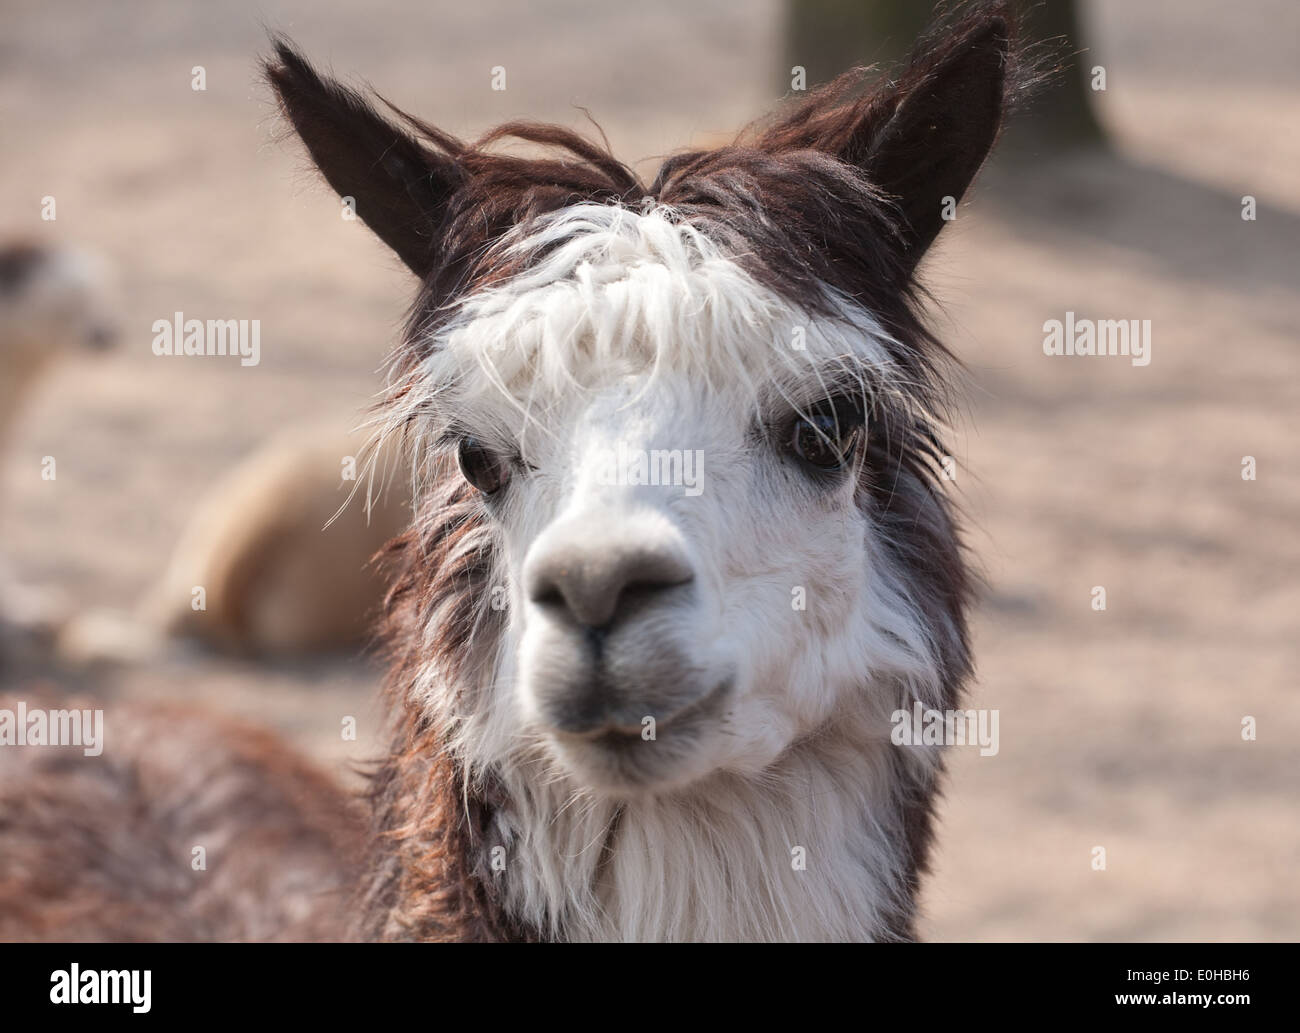 niedliche Lama Tier Closeup Portrait im Profil Stockfoto